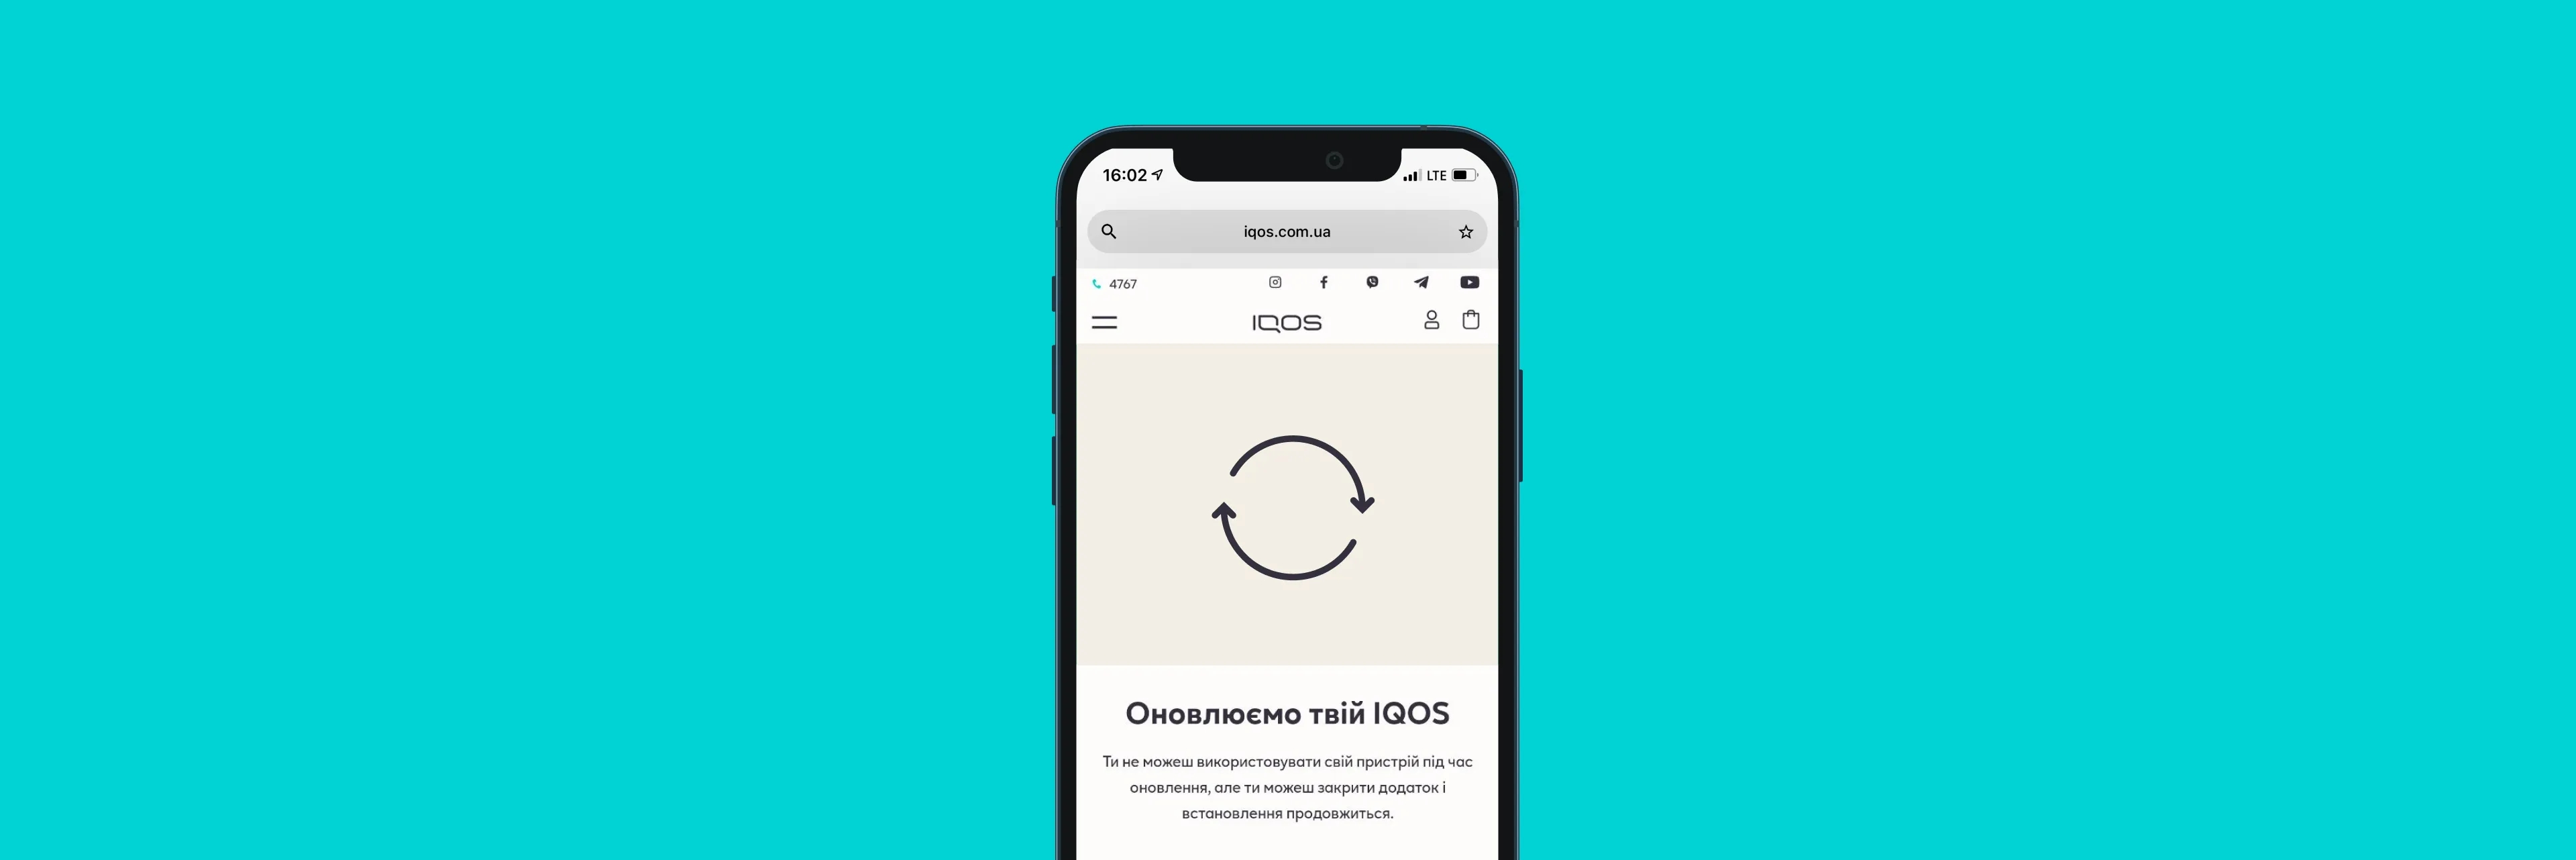 iqos-firmware-update